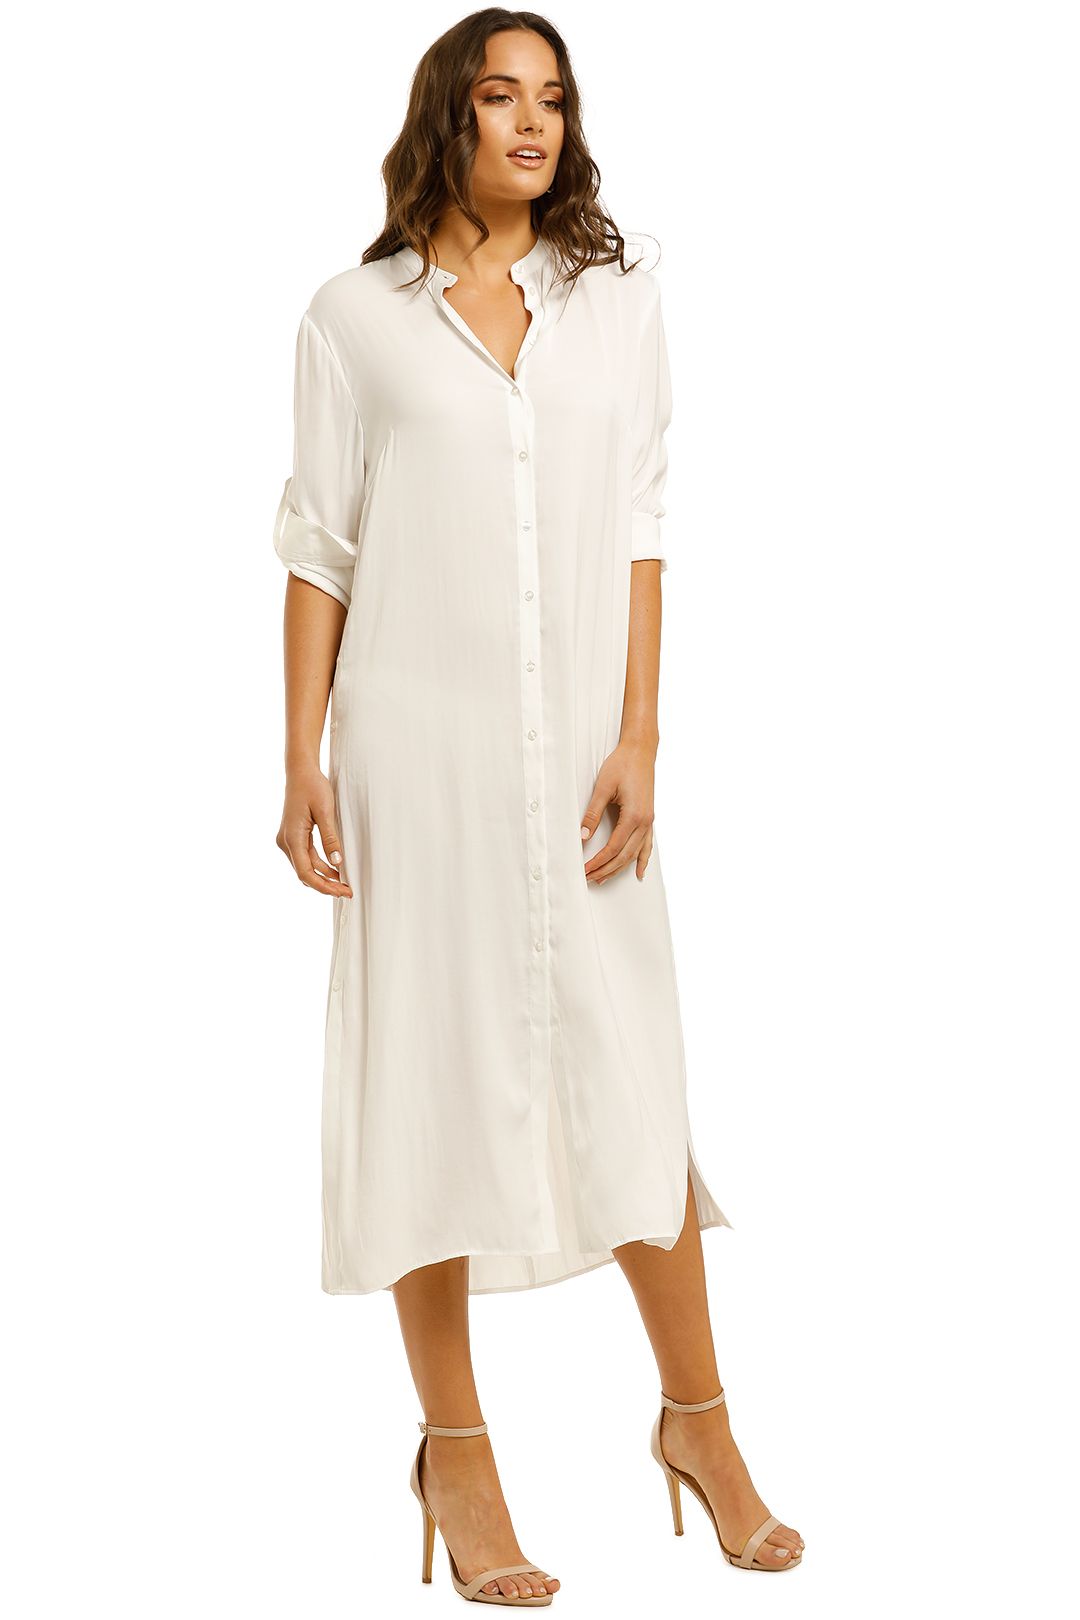 Grace-Willow-Ally-Shirt-Dress-White-Side